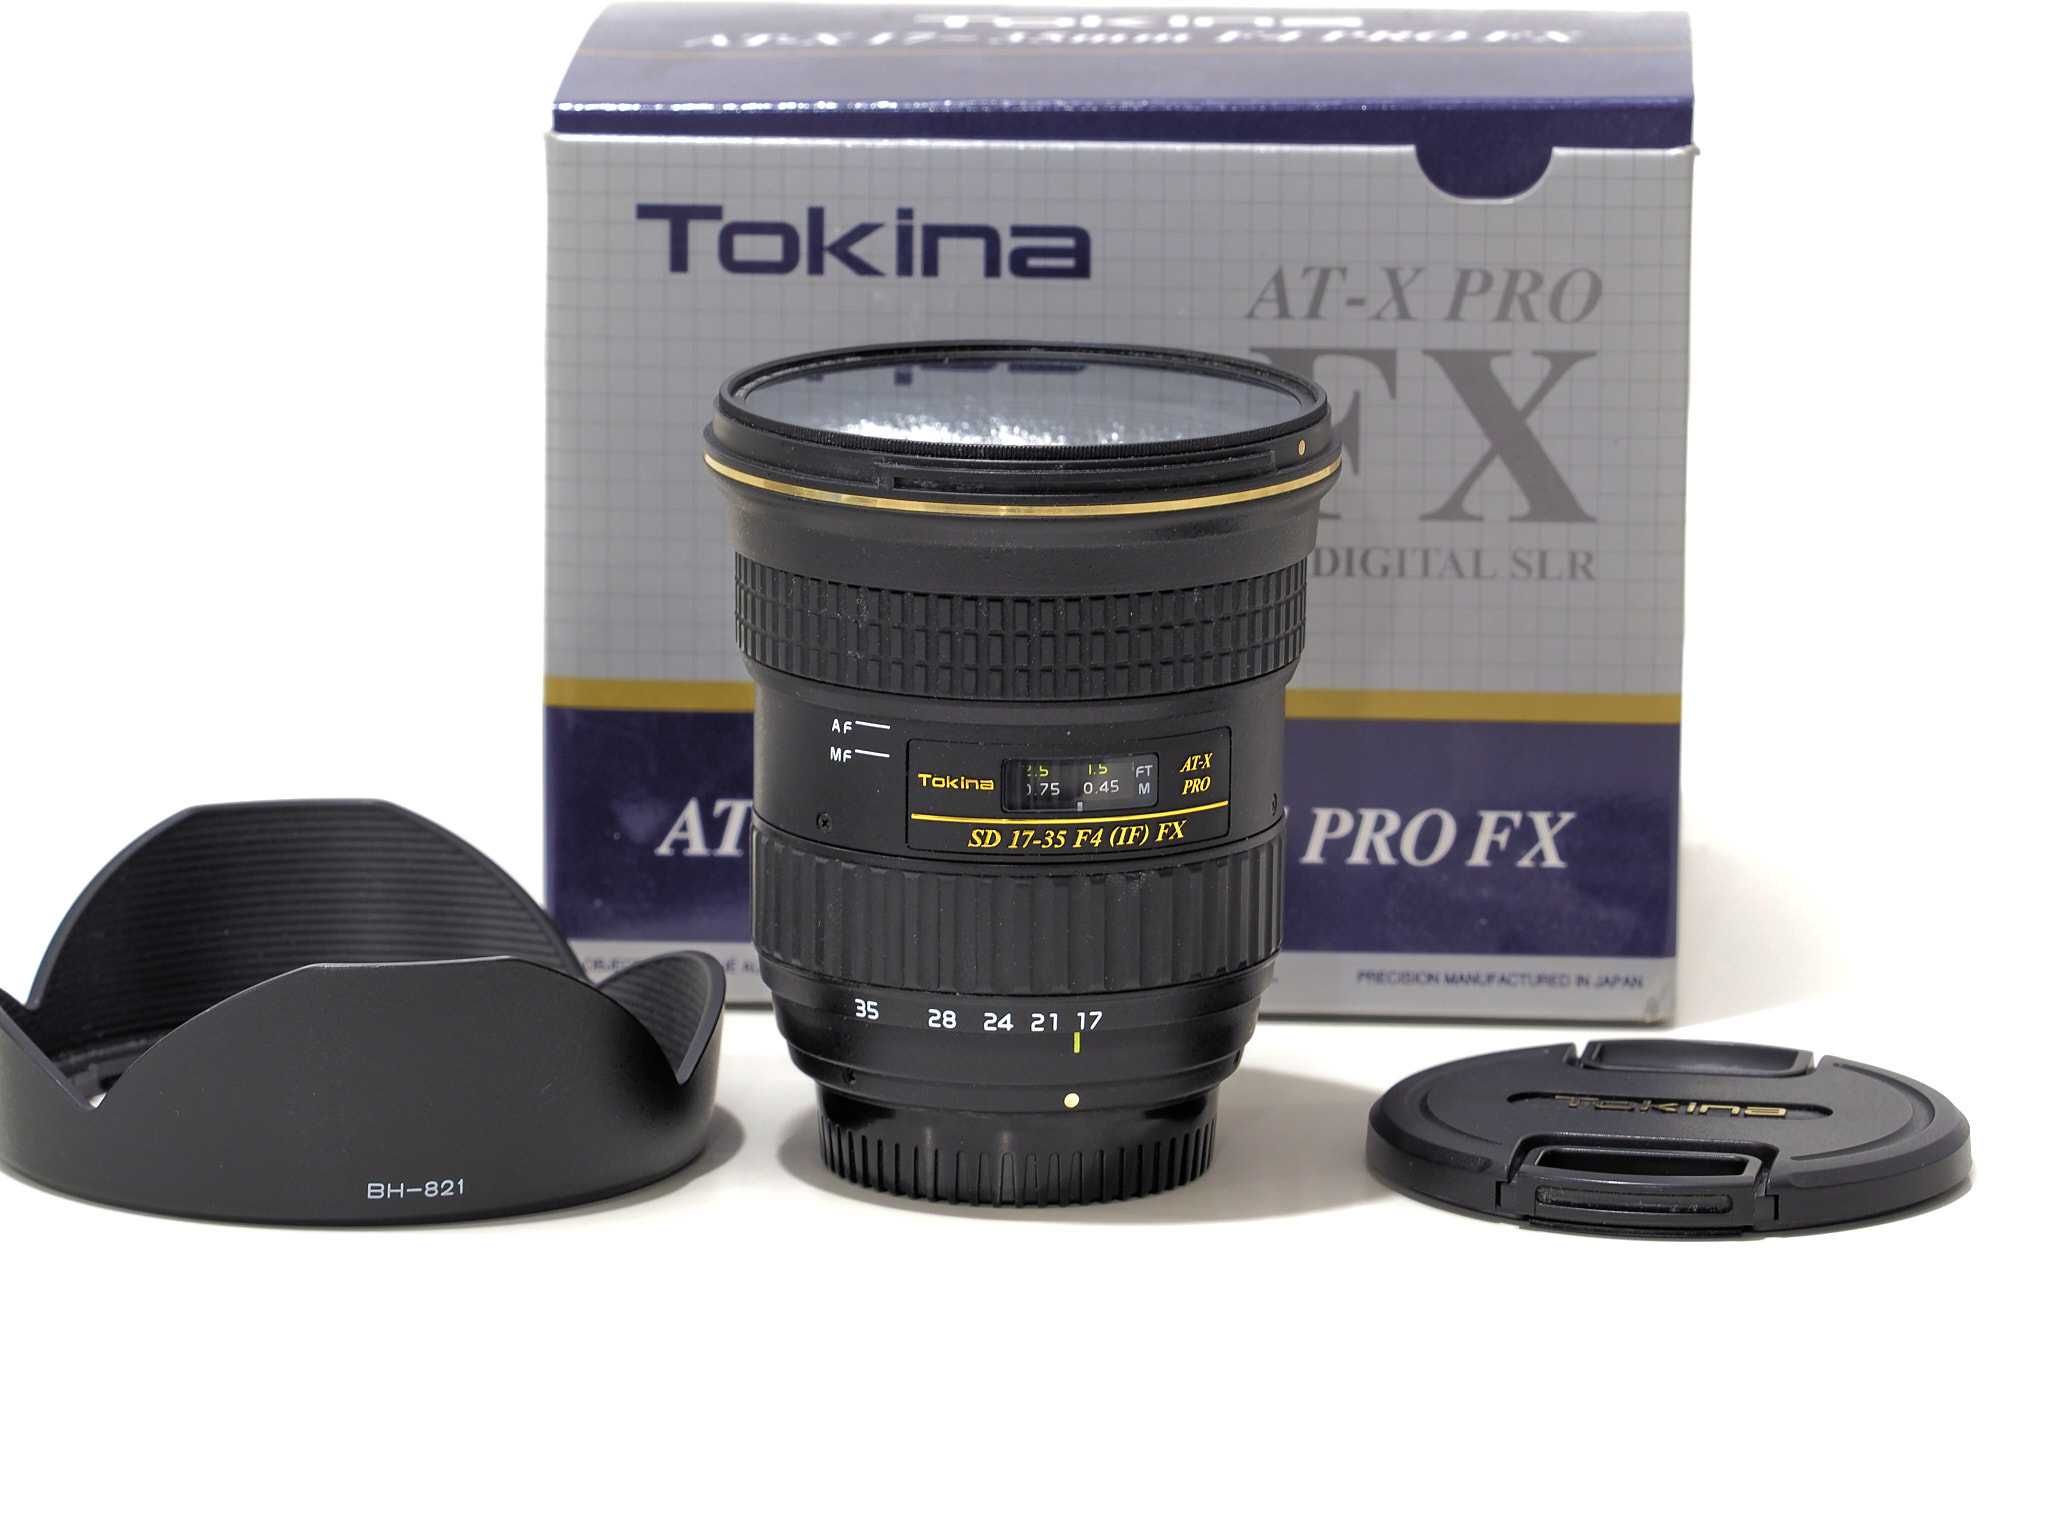 Nikon - Tokina AT-X PRO SD 17-35 F4 (IF) FX